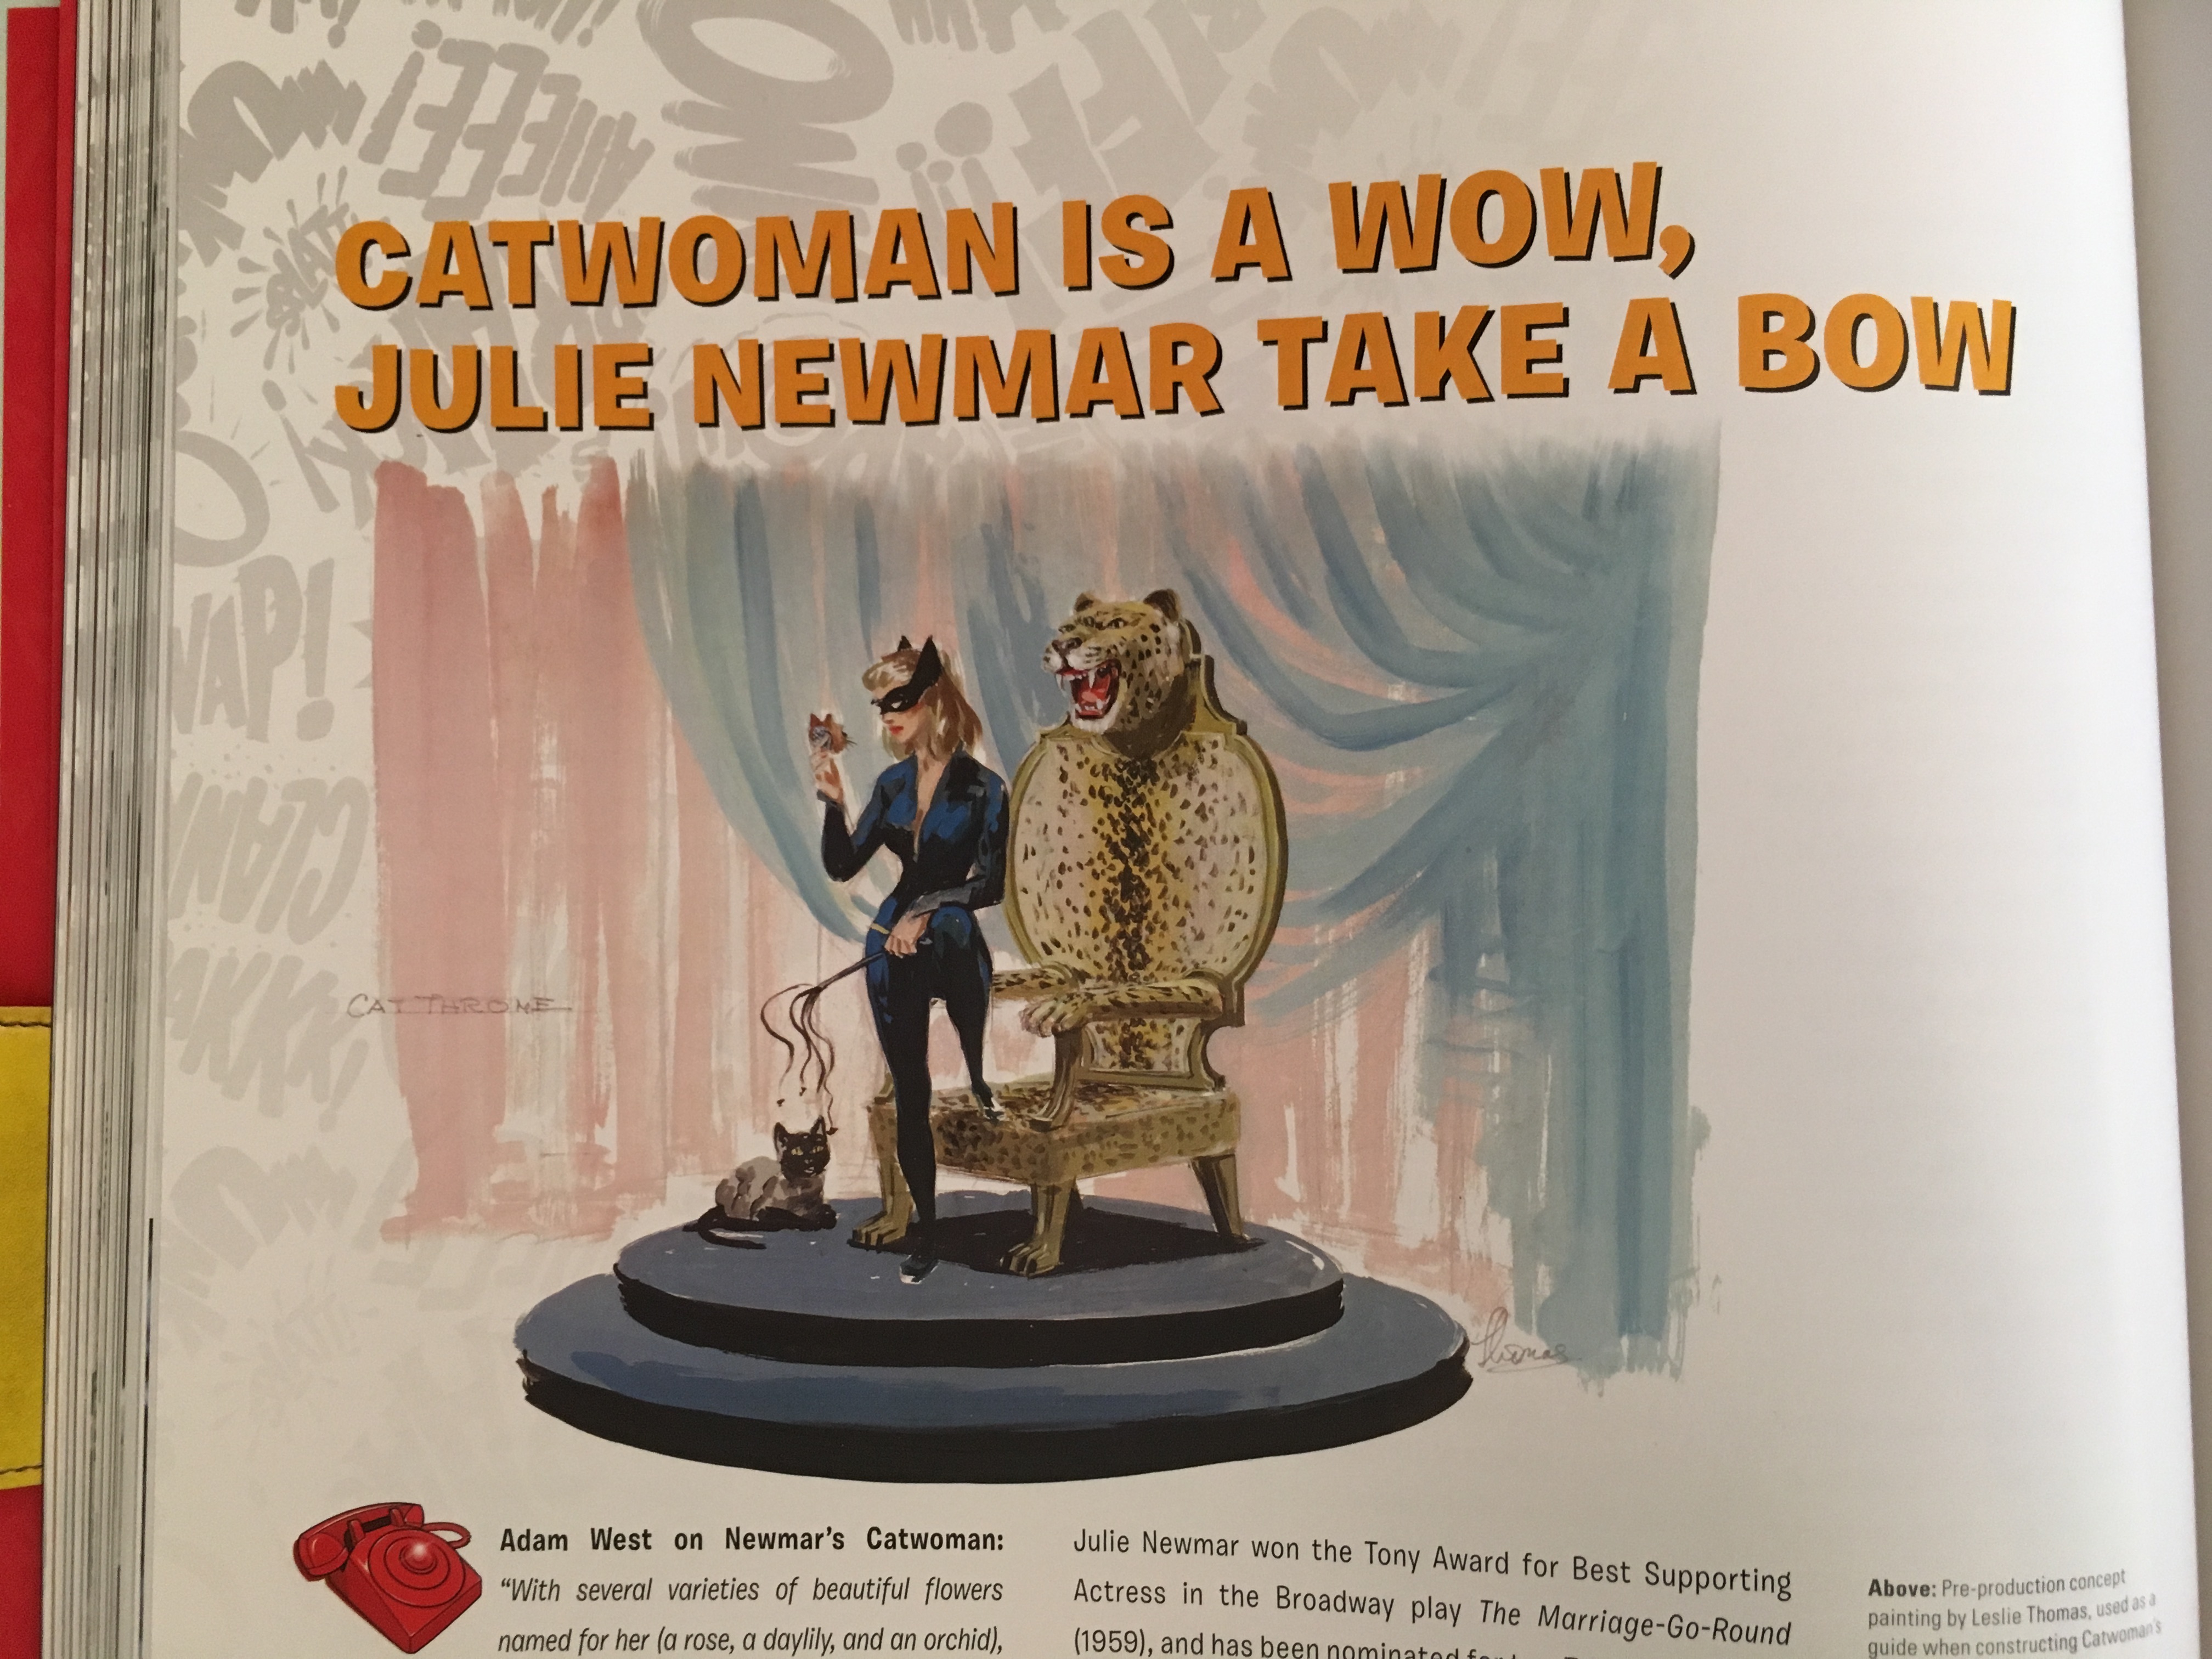 Catwoman -- as a blonde! (Julie Newmar has often worn her hair blonde.)